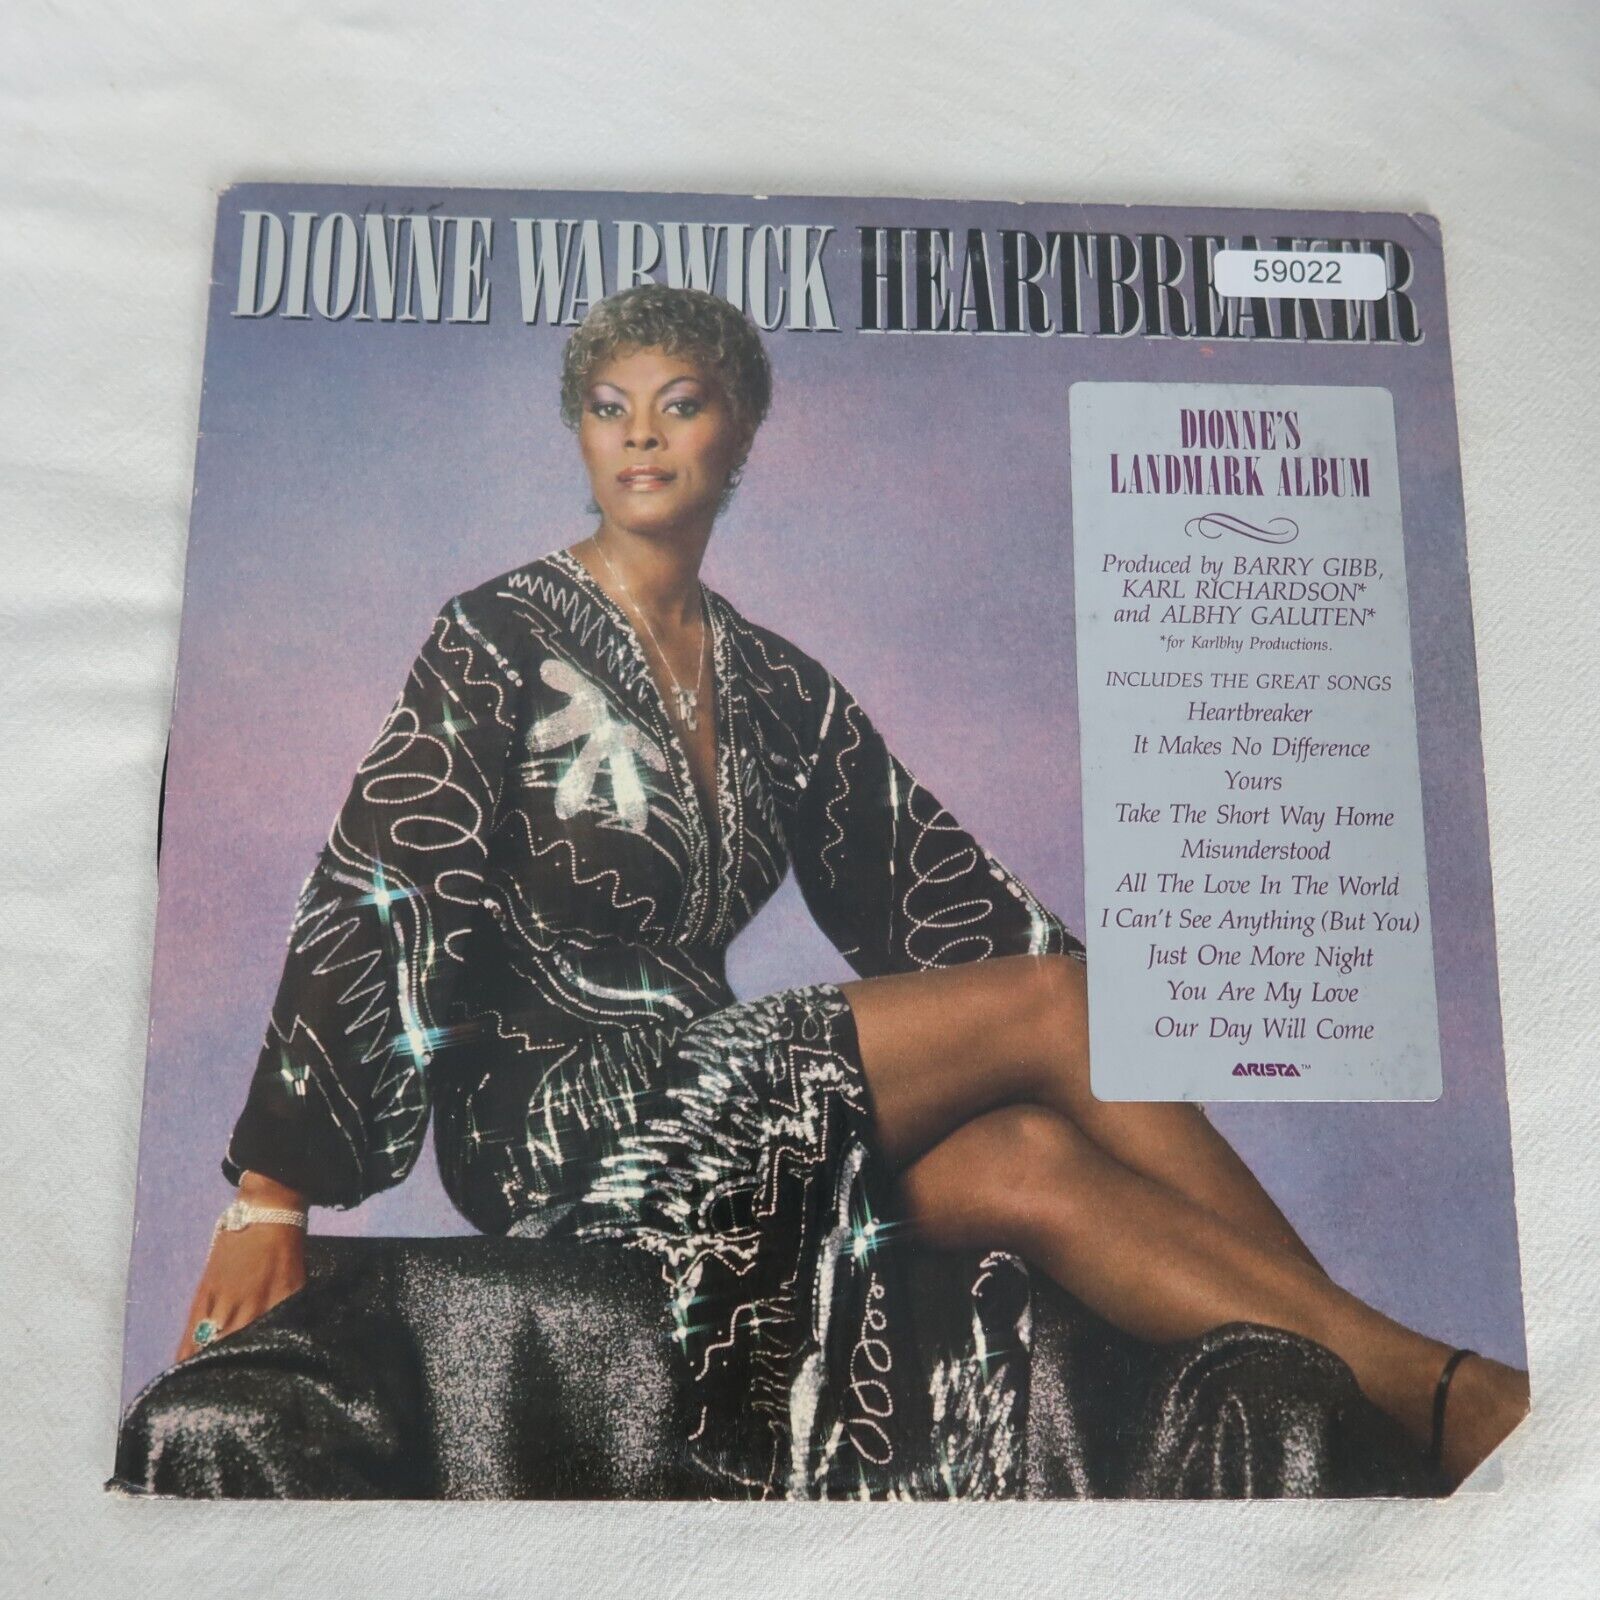 Dionne Warwick Heartbreaker LP Vinyl Record Album